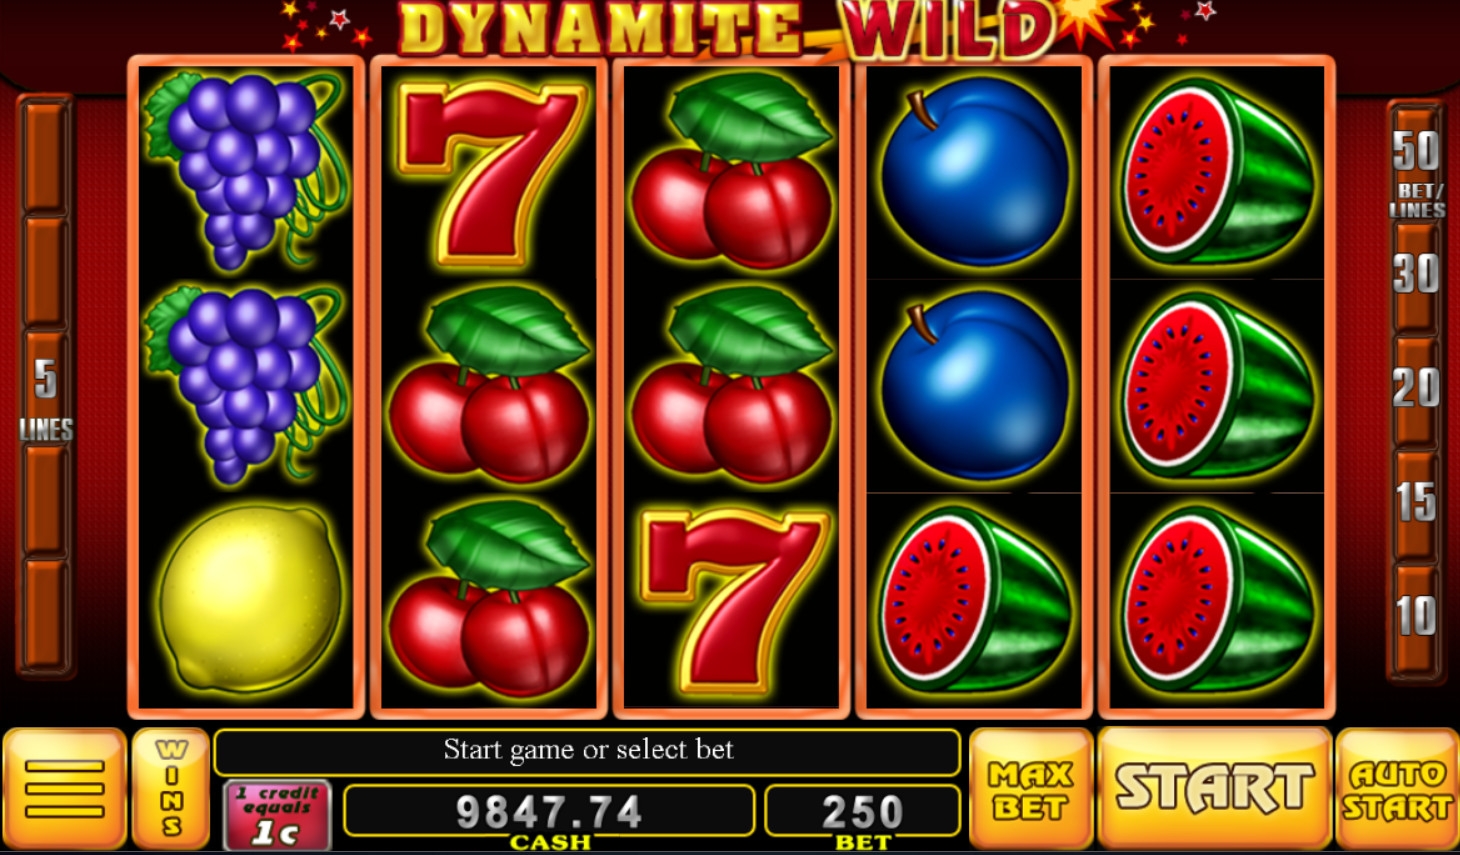 Dynamite Wild (Dynamite Wild) from category Slots